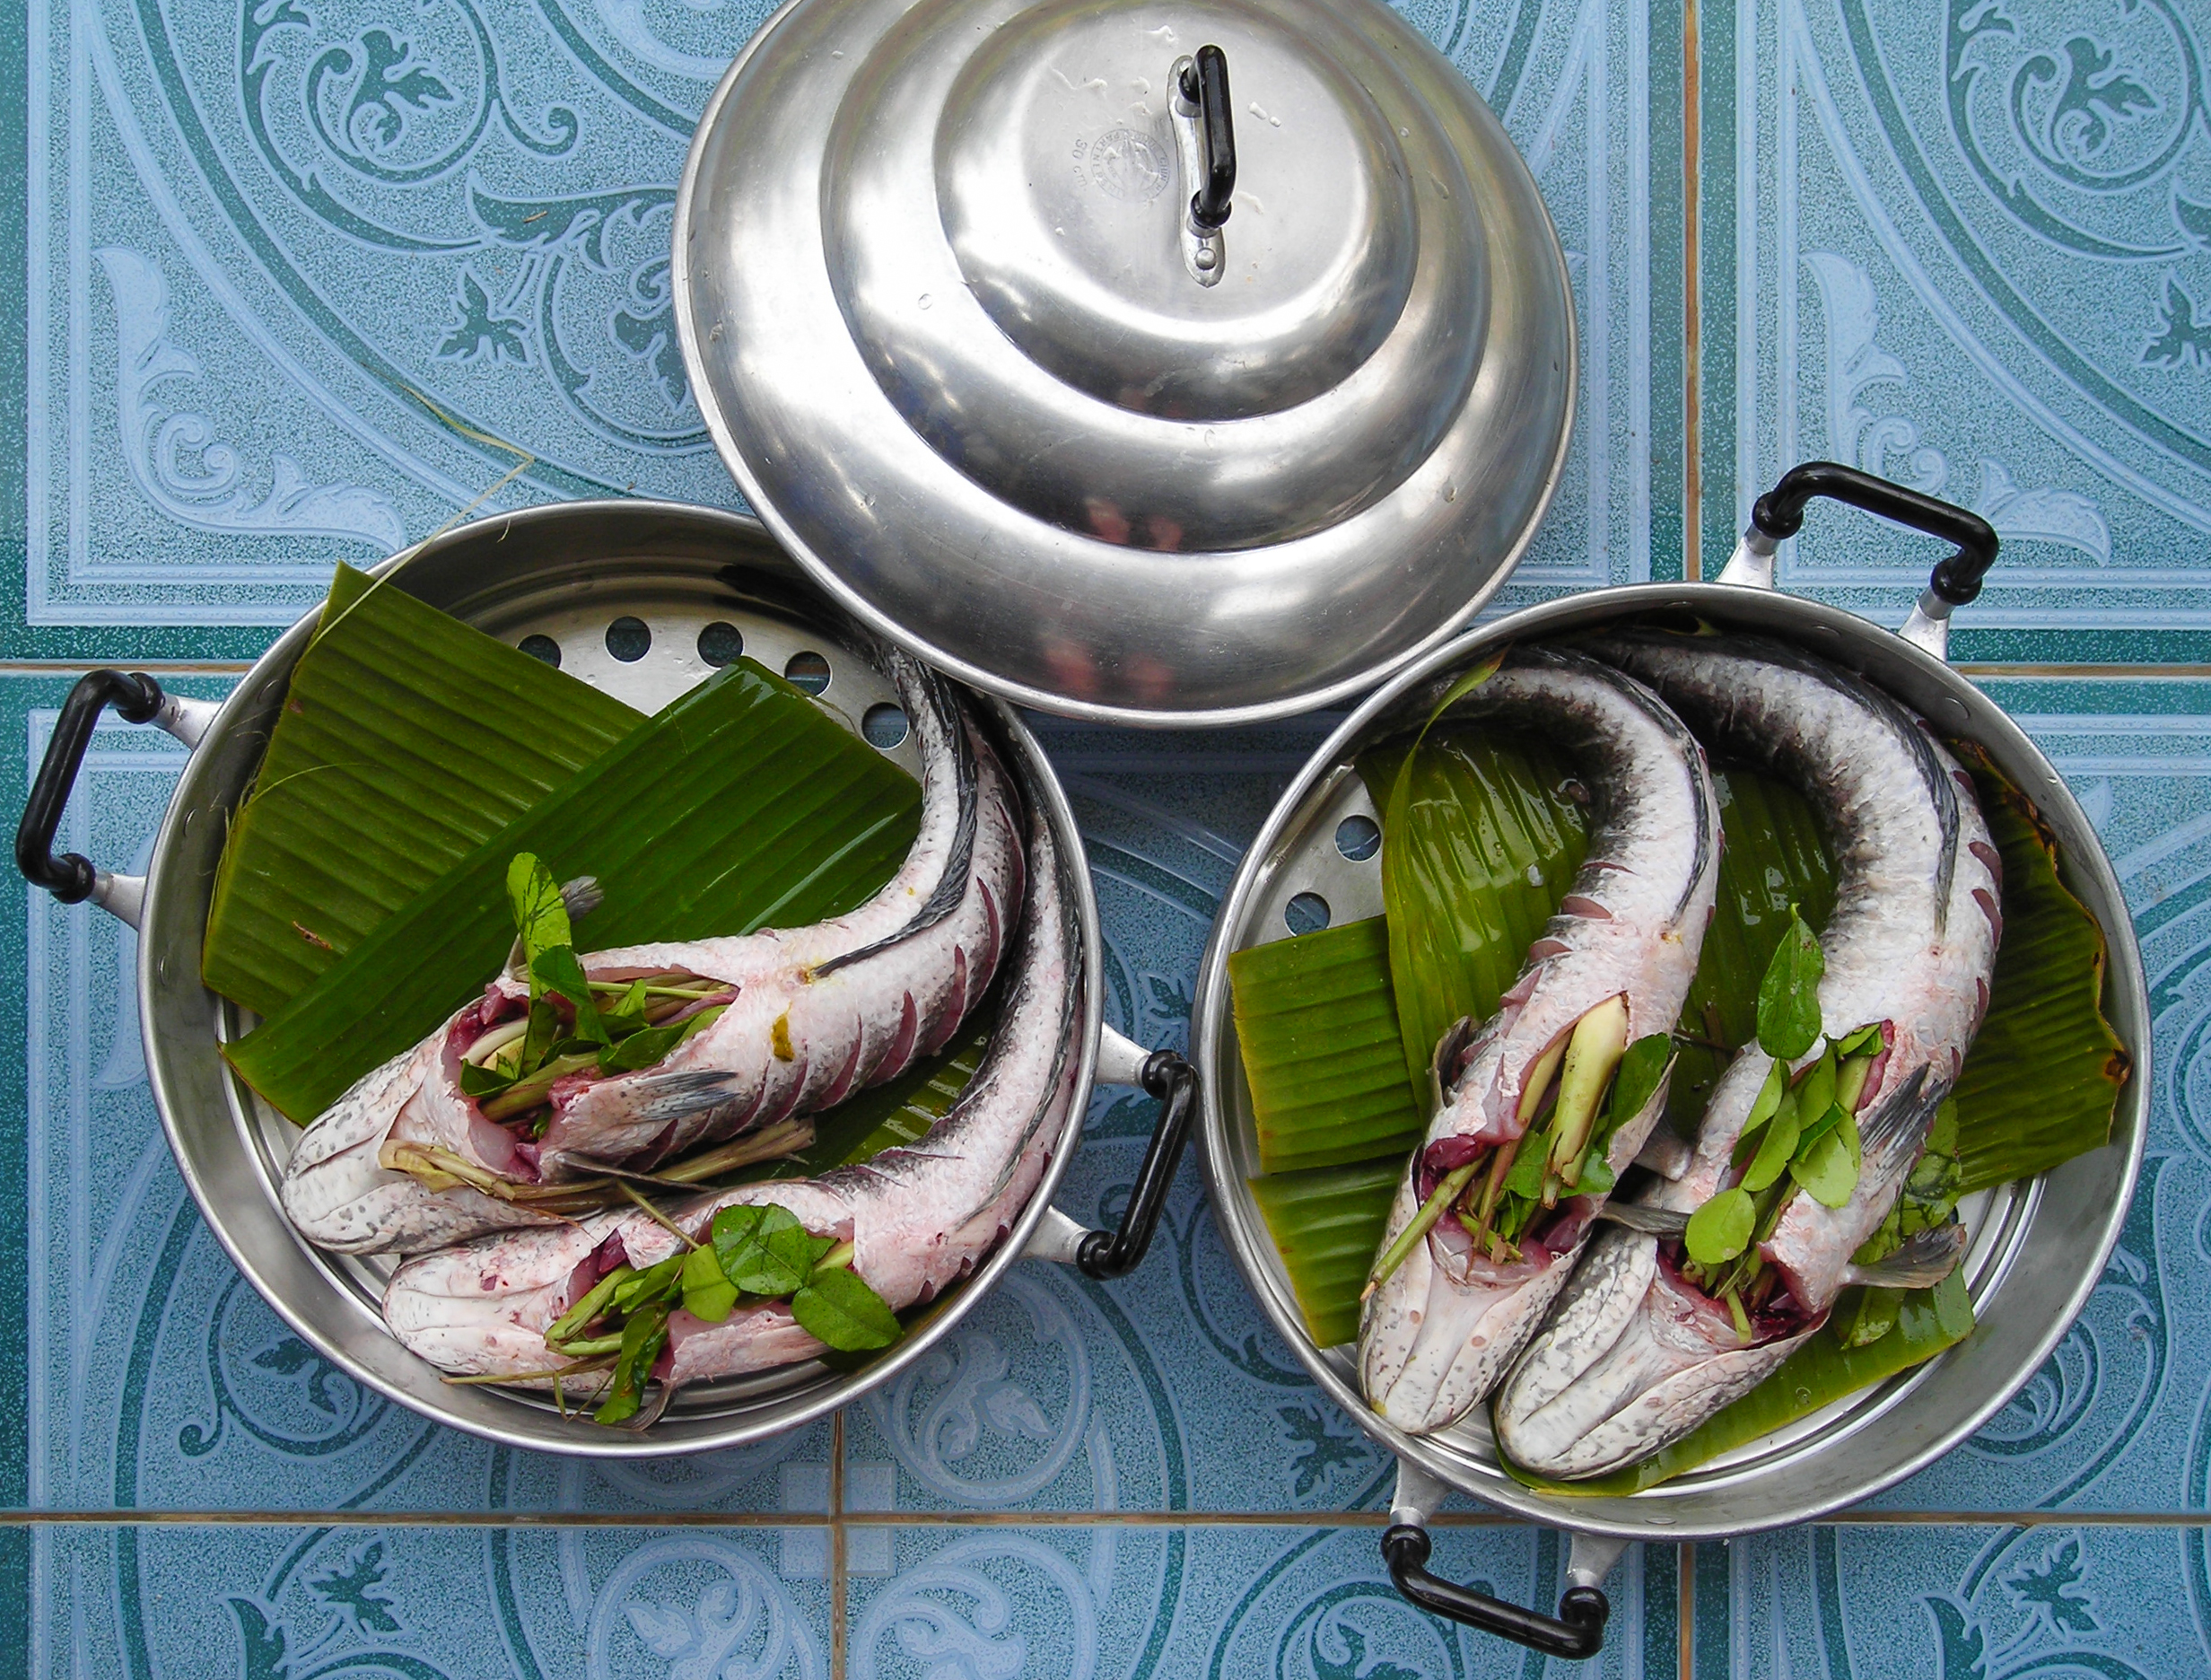 https://upload.wikimedia.org/wikipedia/commons/1/19/Fish_stuffed_with_Thai_herbs.jpg